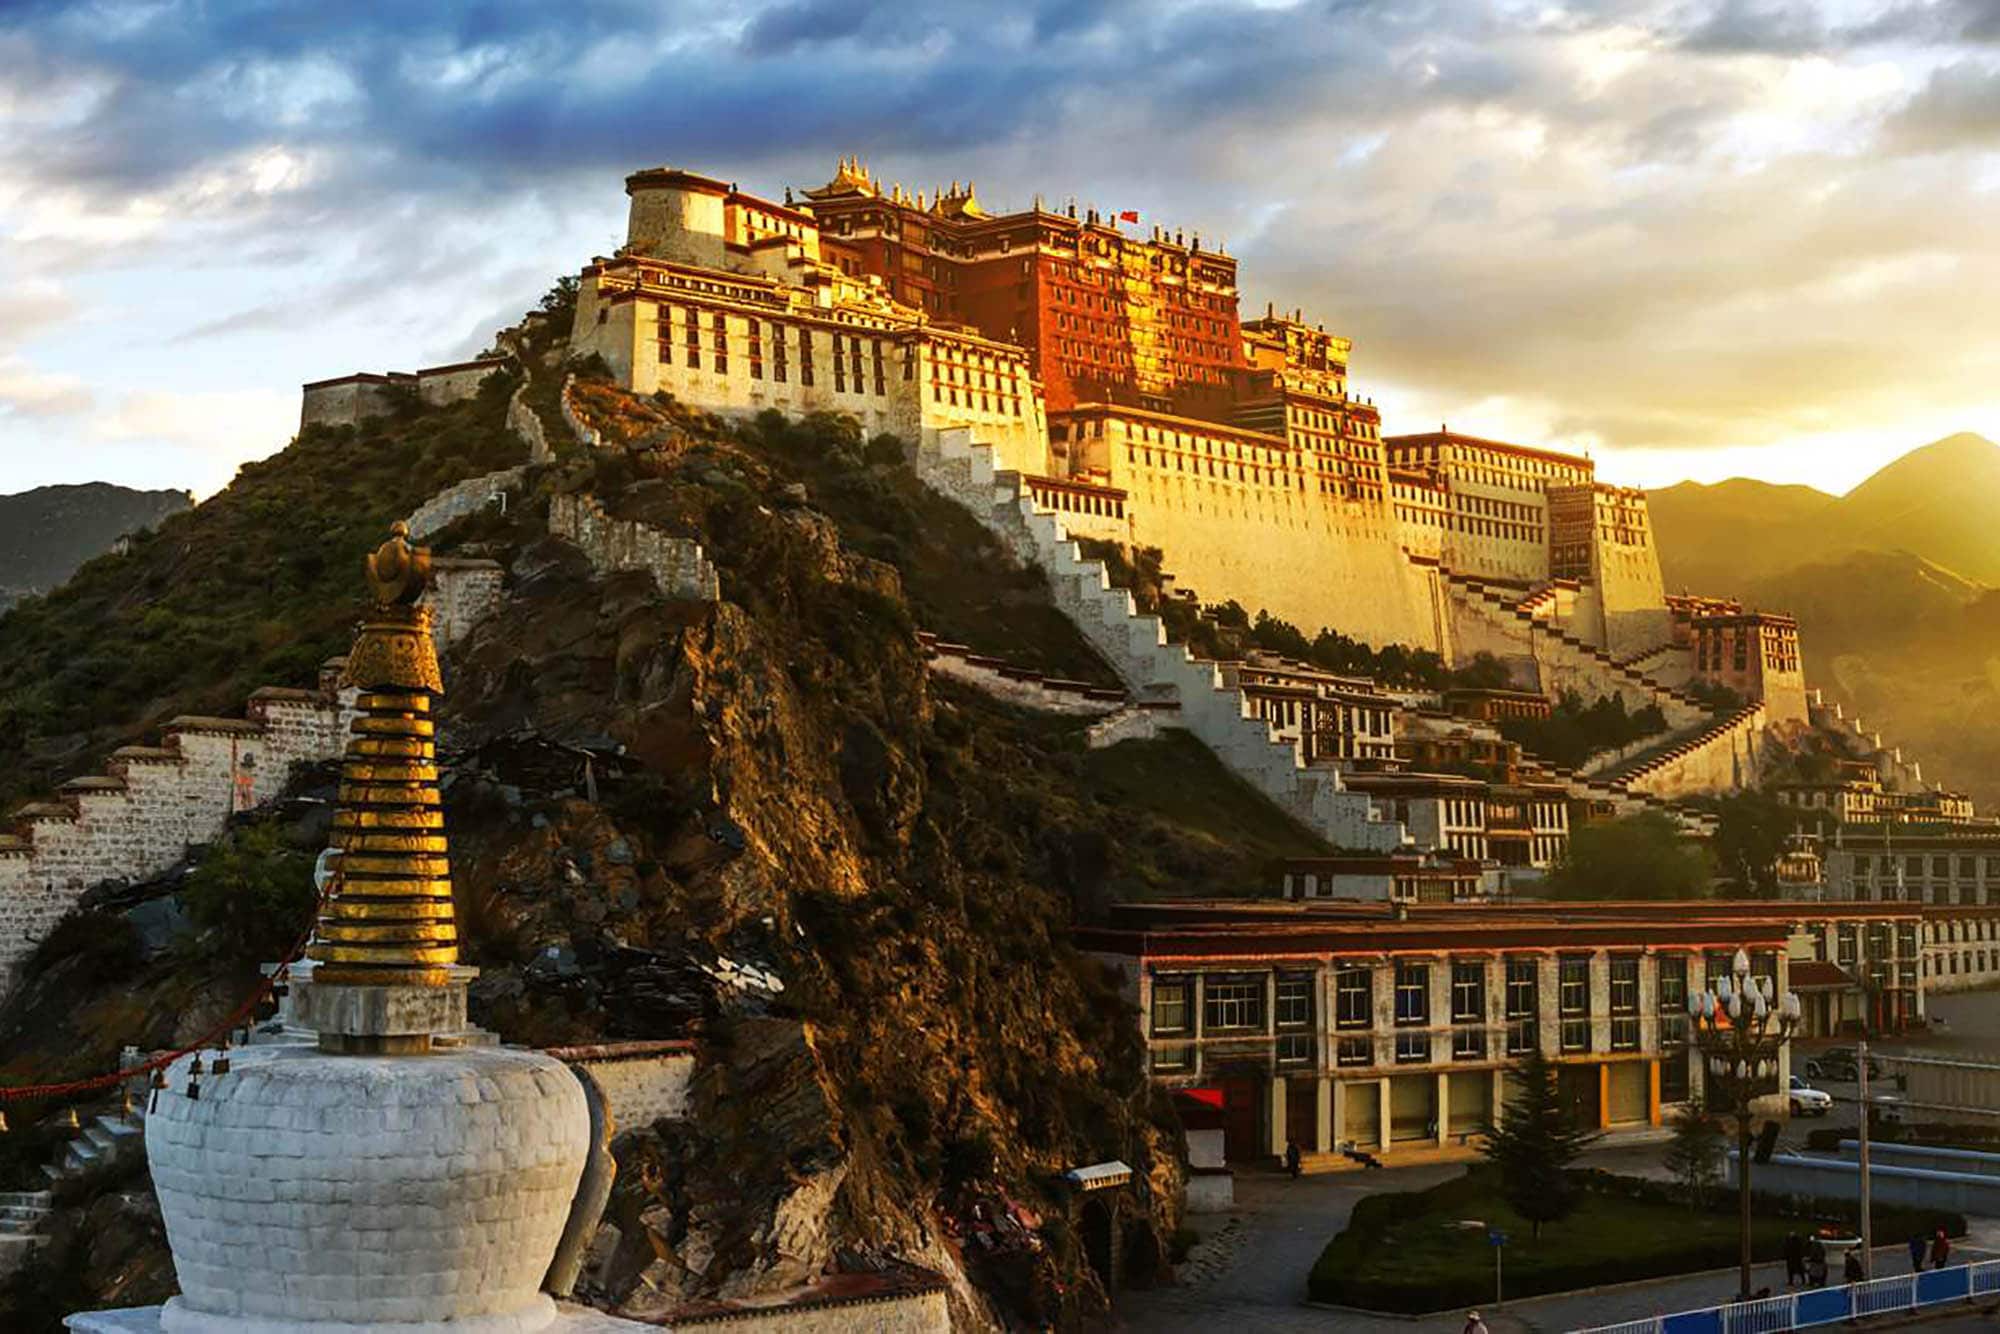 lhasa tour package